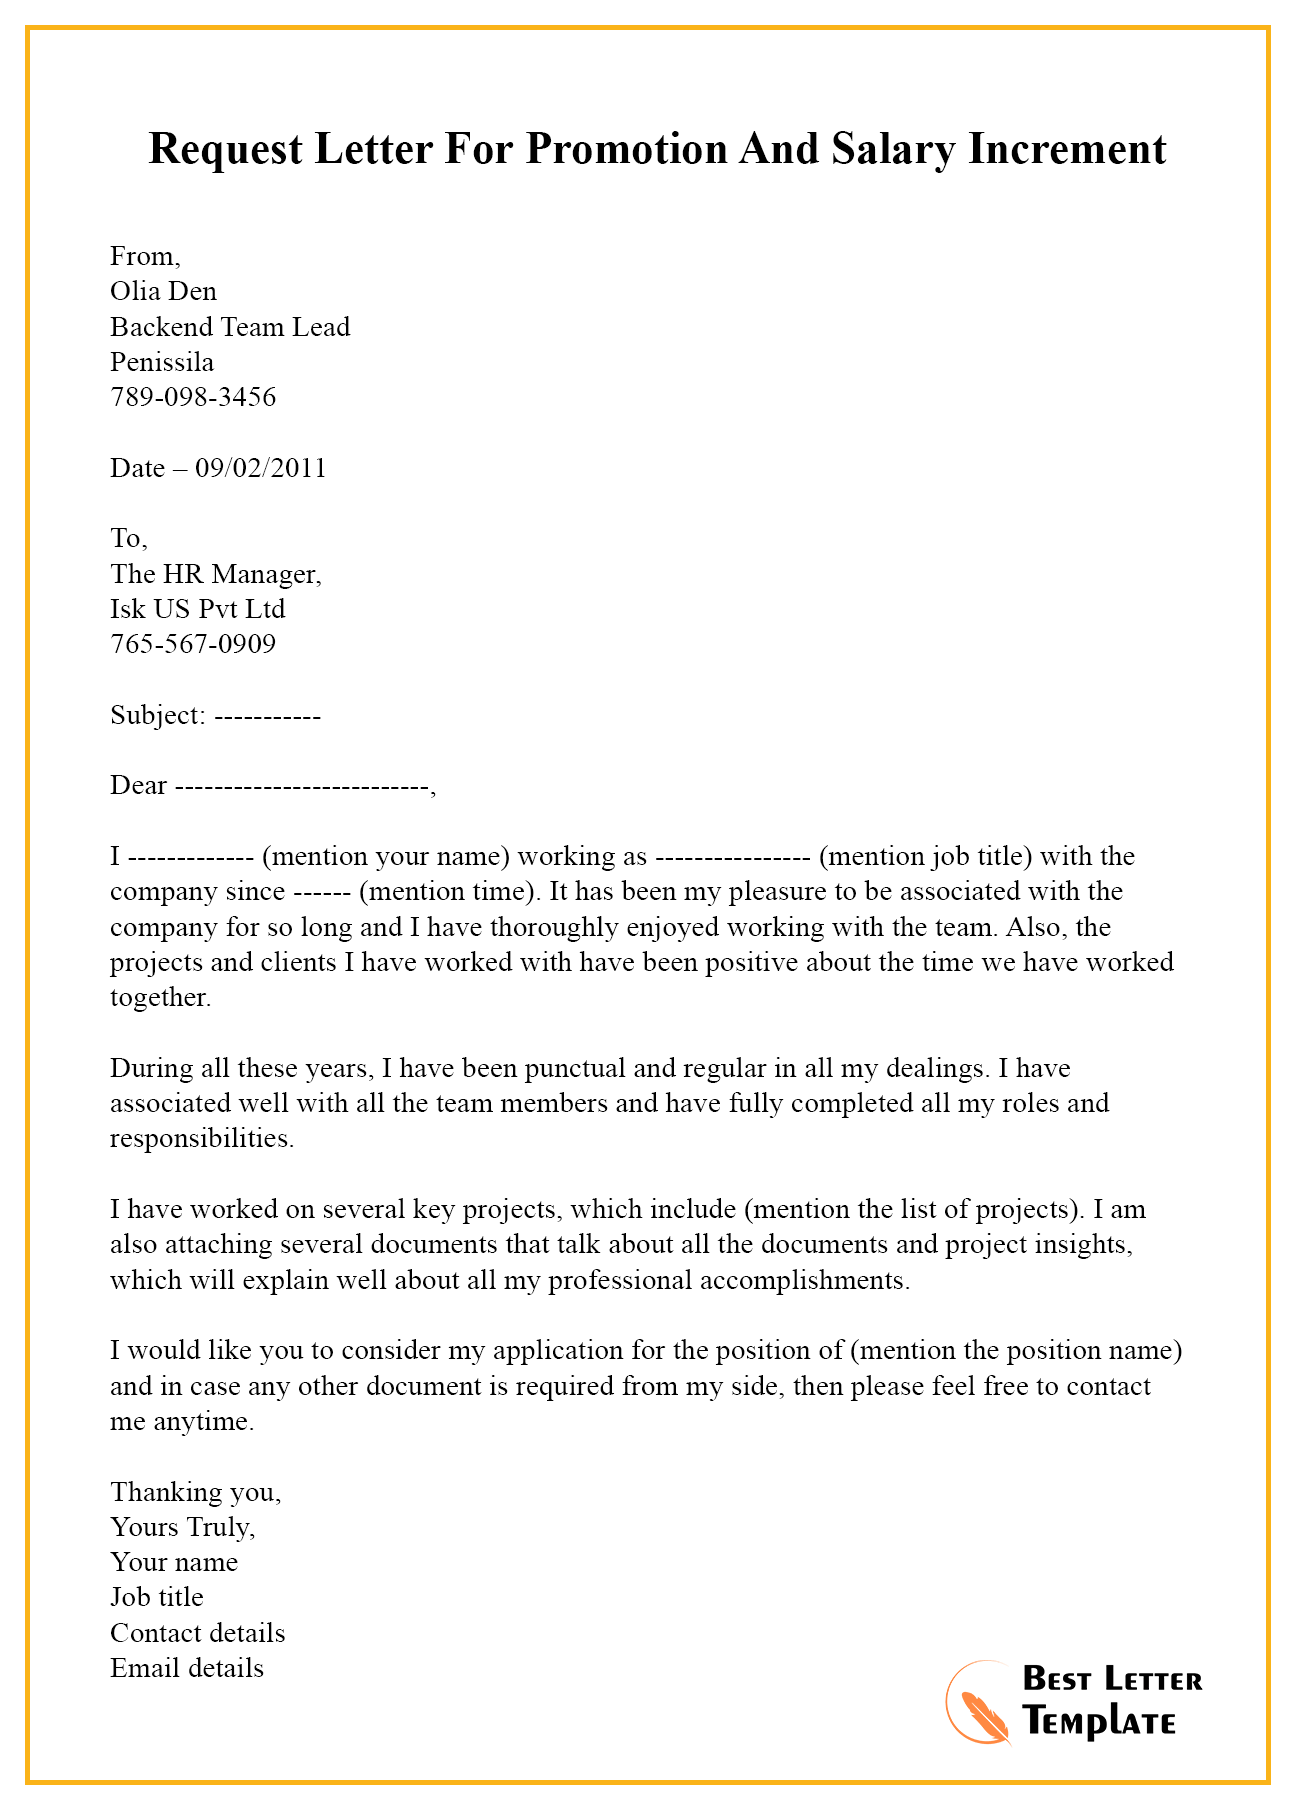 Salary Increment Letter Samples from bestlettertemplate.com